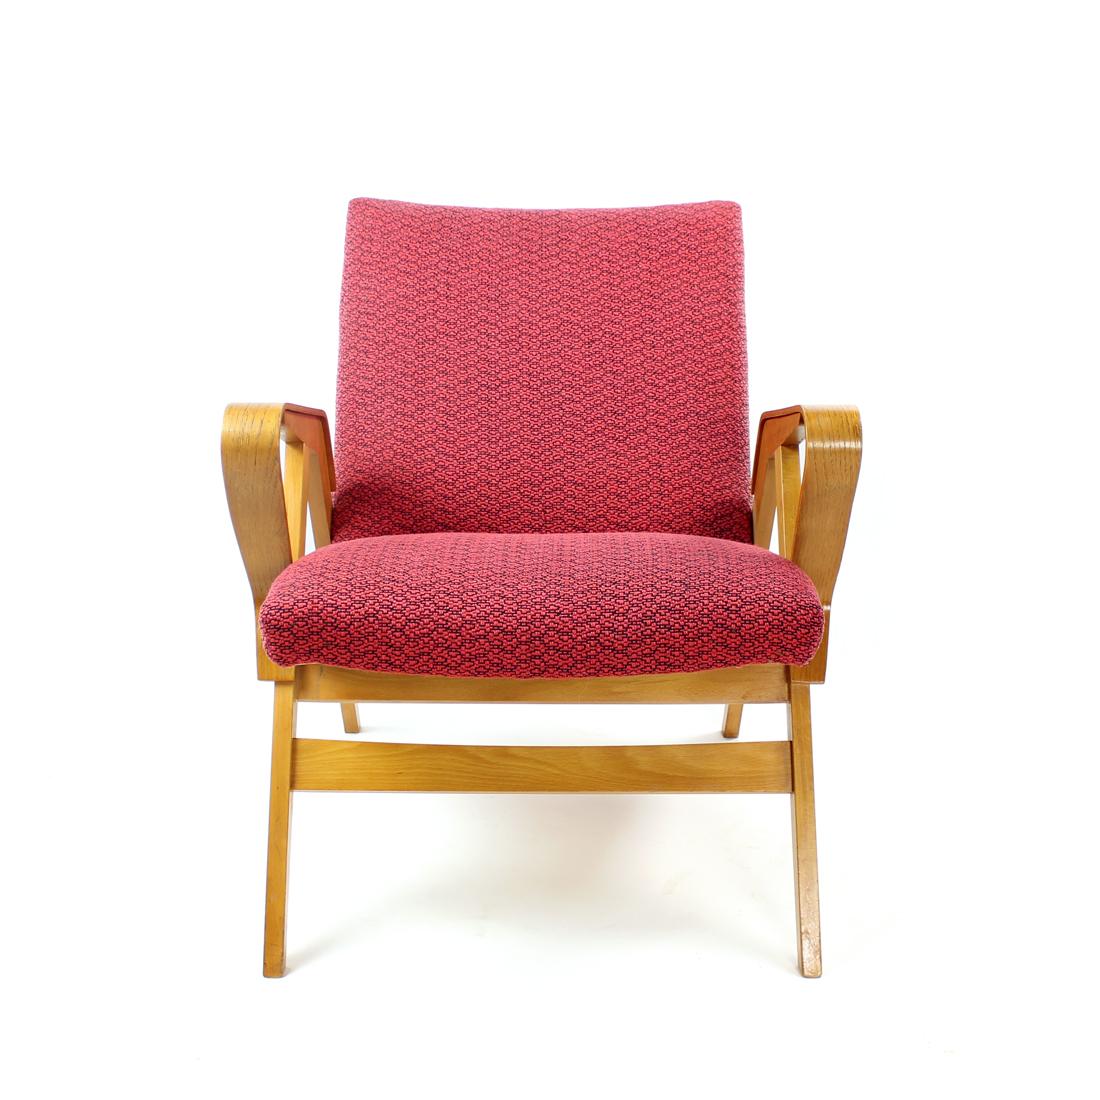 Midcentury Armchair in Pink Fabric & Oak by Tatra, Czechoslovakia, 1960s For Sale 1